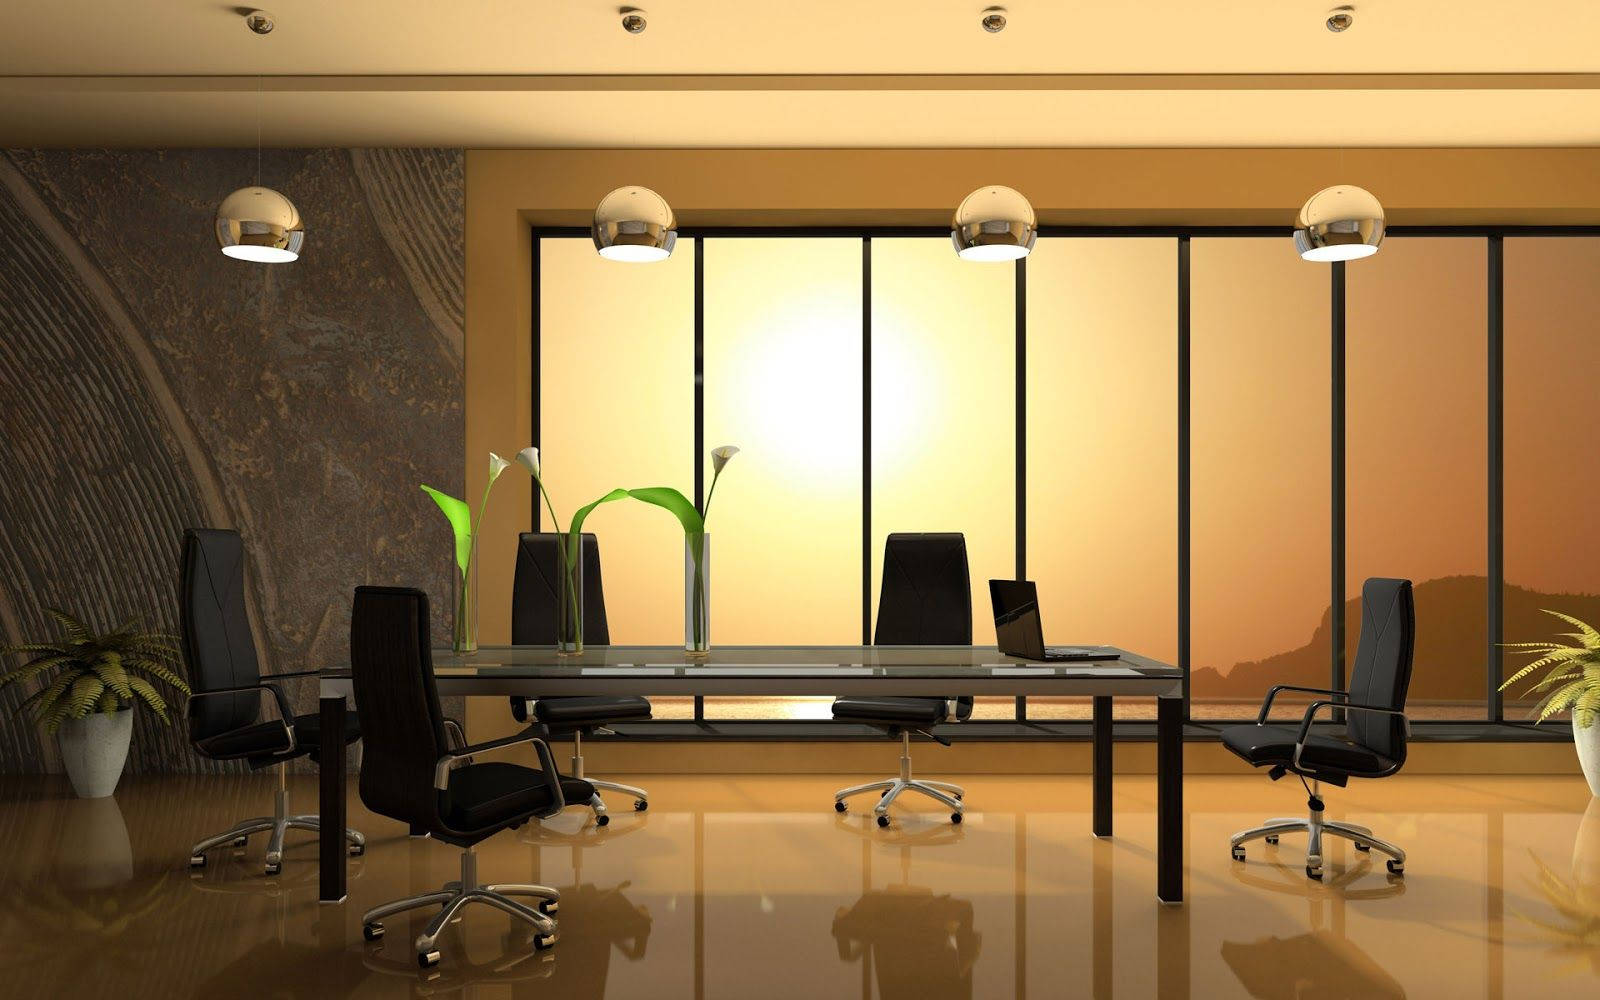 Office Desk Conference Room At Sunset Wallpaper